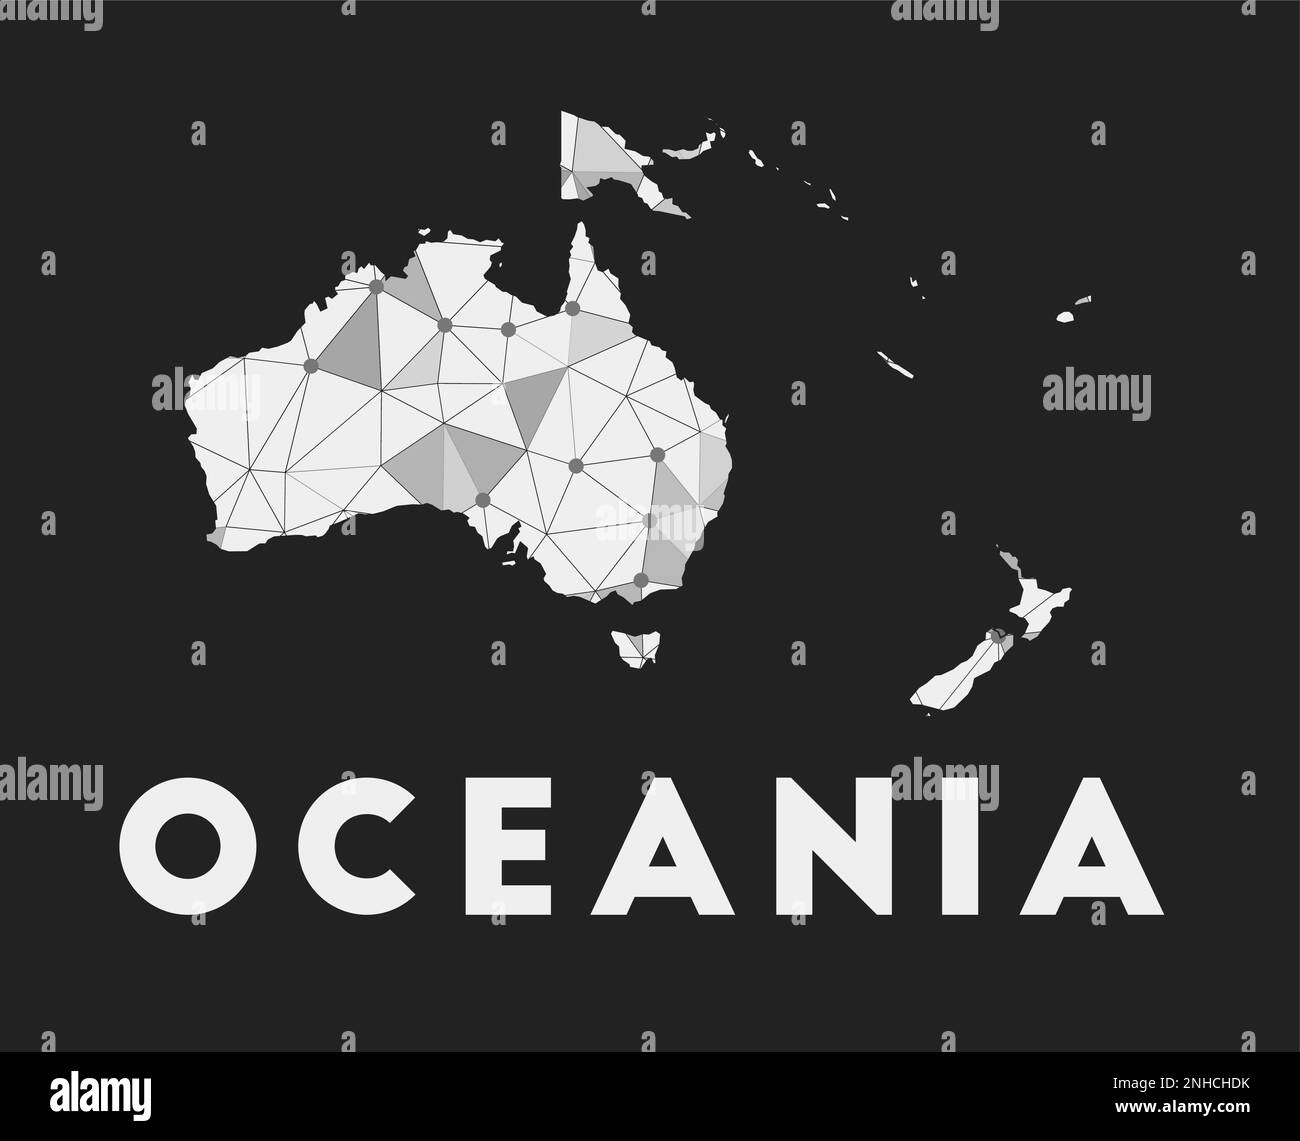 Oceania - communication network map of continent. Oceania trendy geometric design on dark background. Technology, internet, network, telecommunication Stock Vector